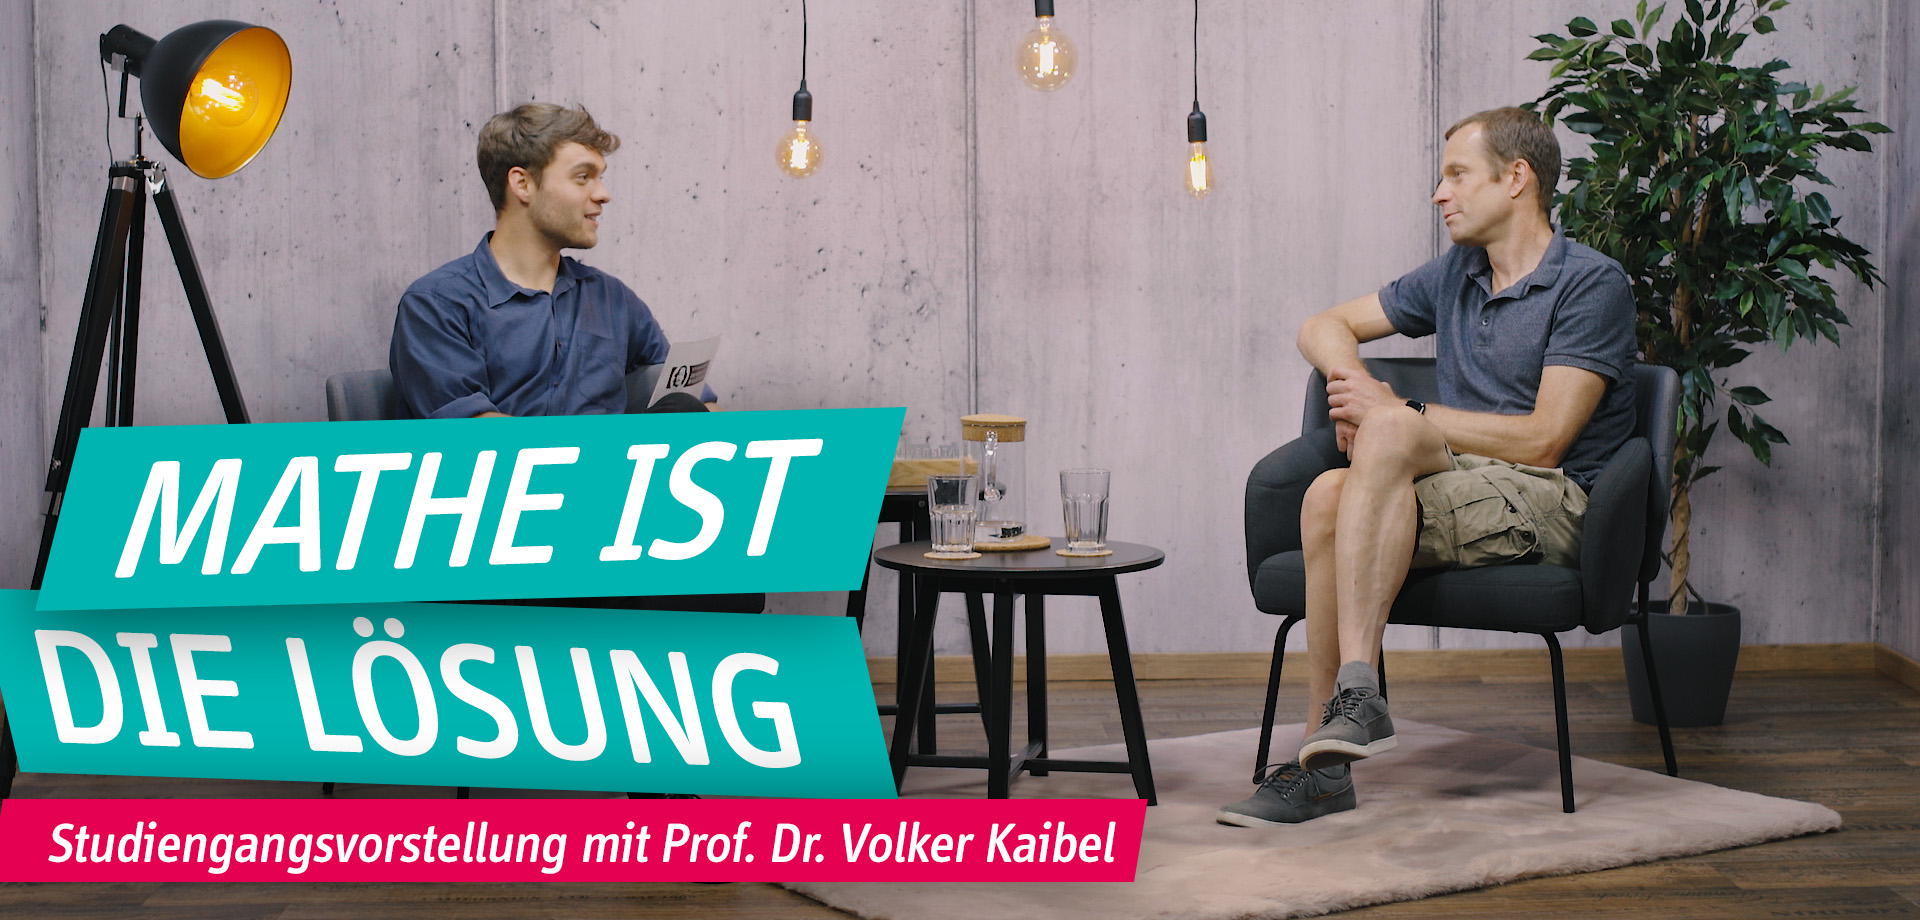 Header - Video Studiengangsvorstellung mit Prof. Dr. Volker Kaibel